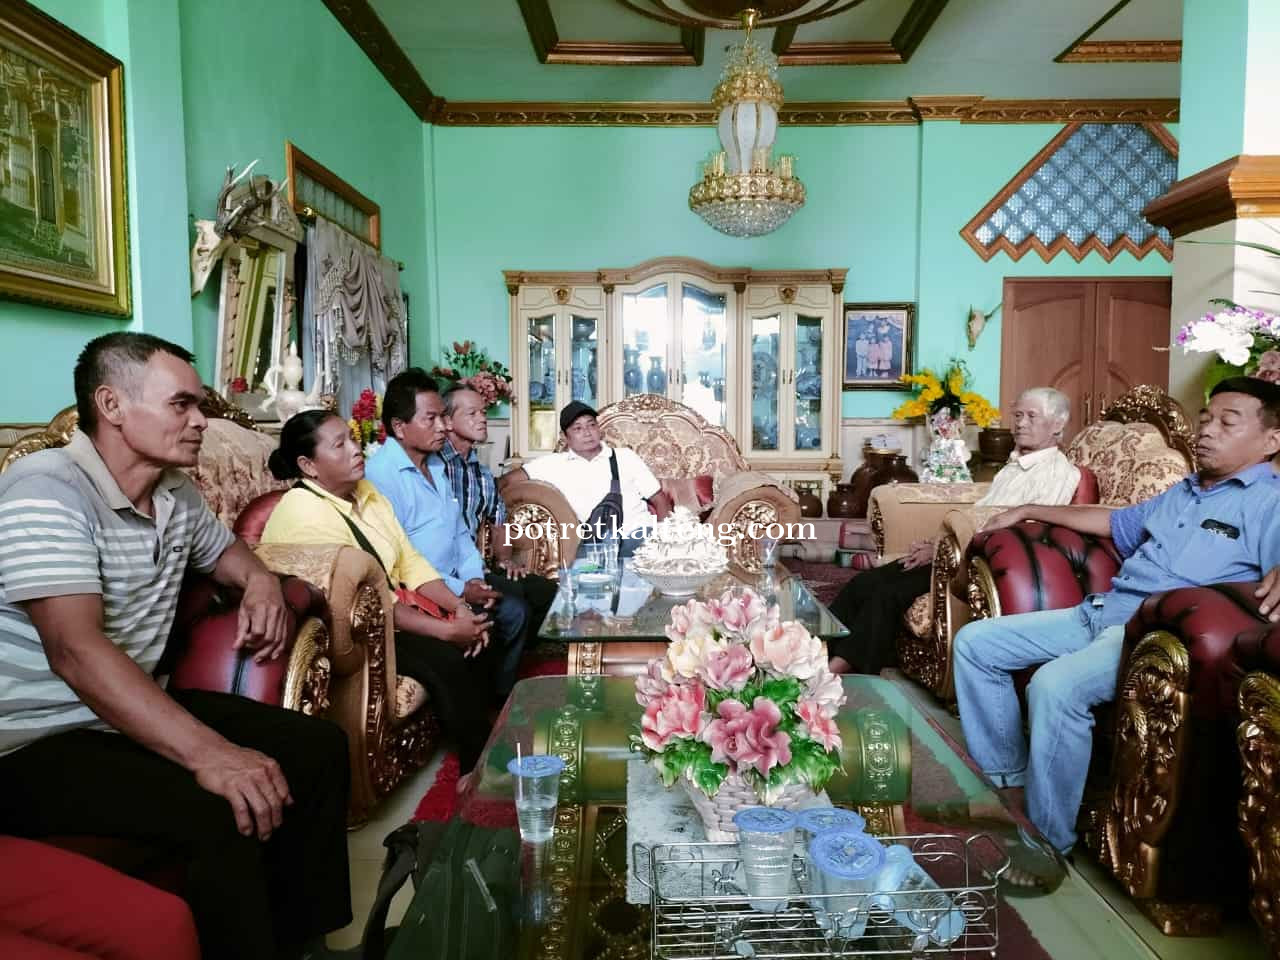 Diduga Kades Melakukan Asusila, Warga Hajak Mengadu Ke Anggota DPRD Barito Utara